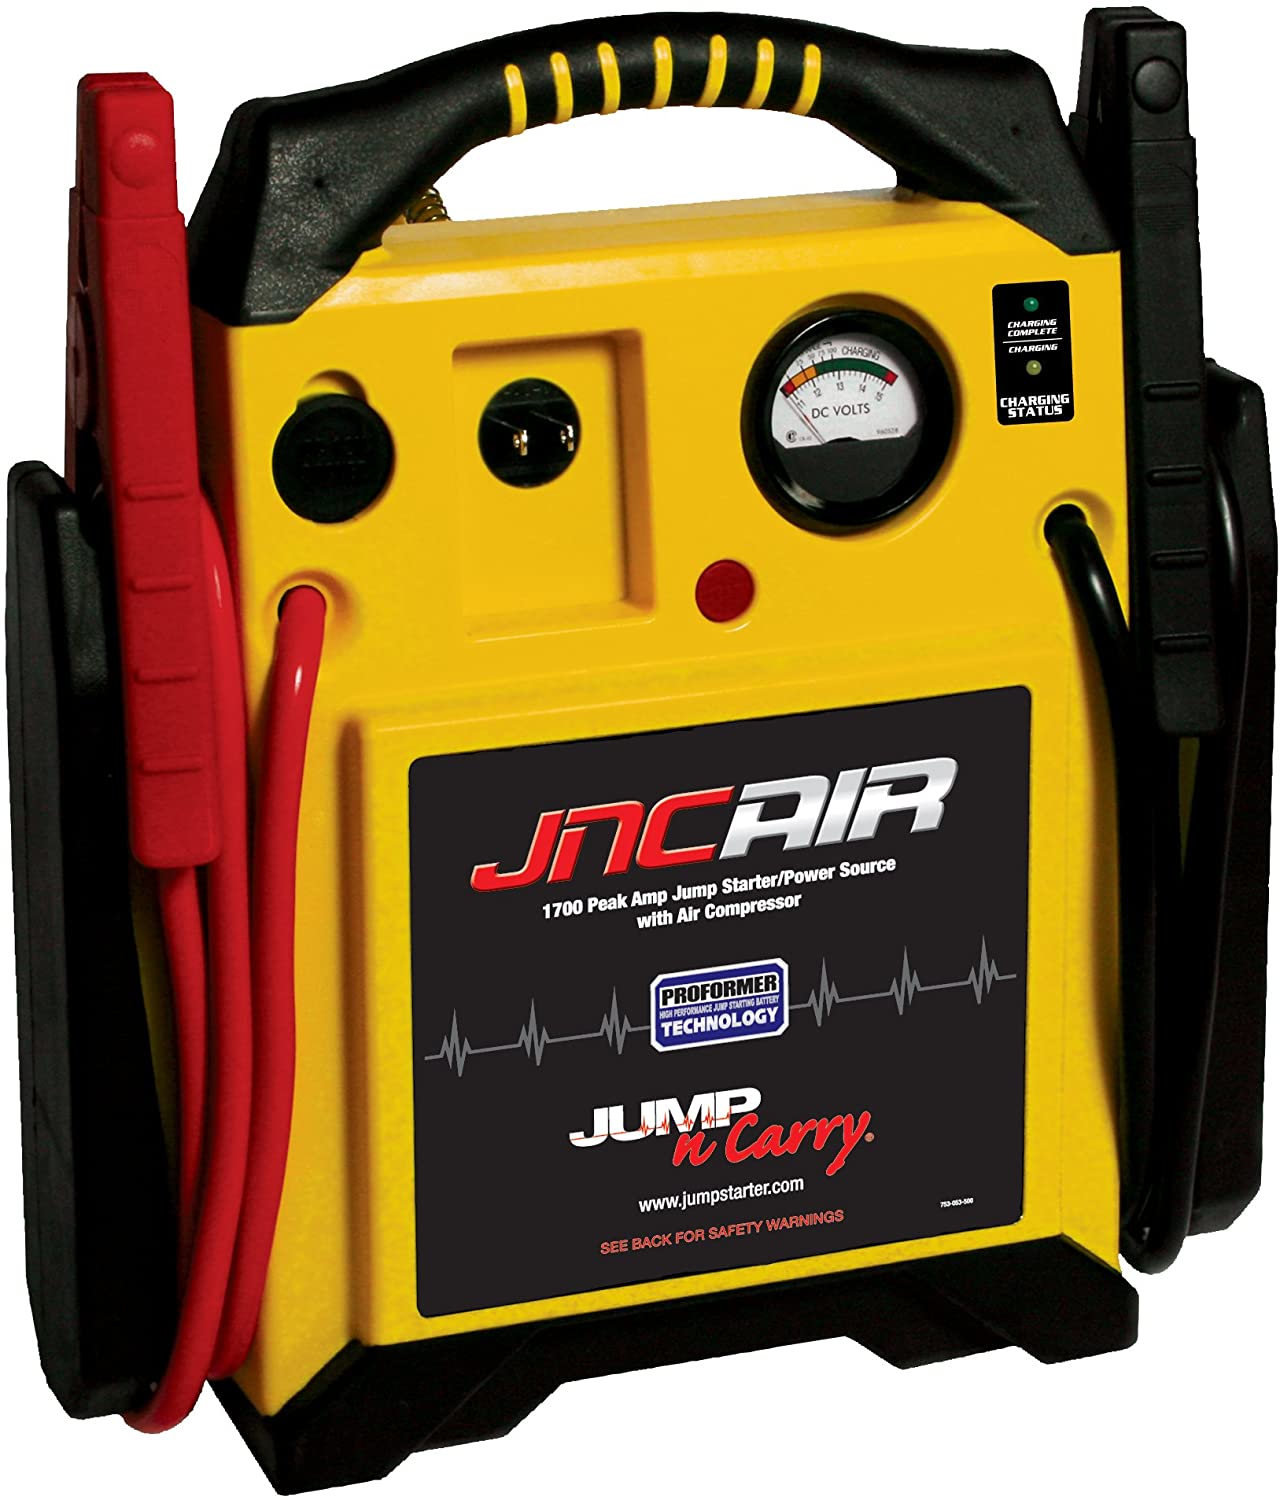 Top 10 Best Portable Jump Starter with Air Compressor 2021 Generators